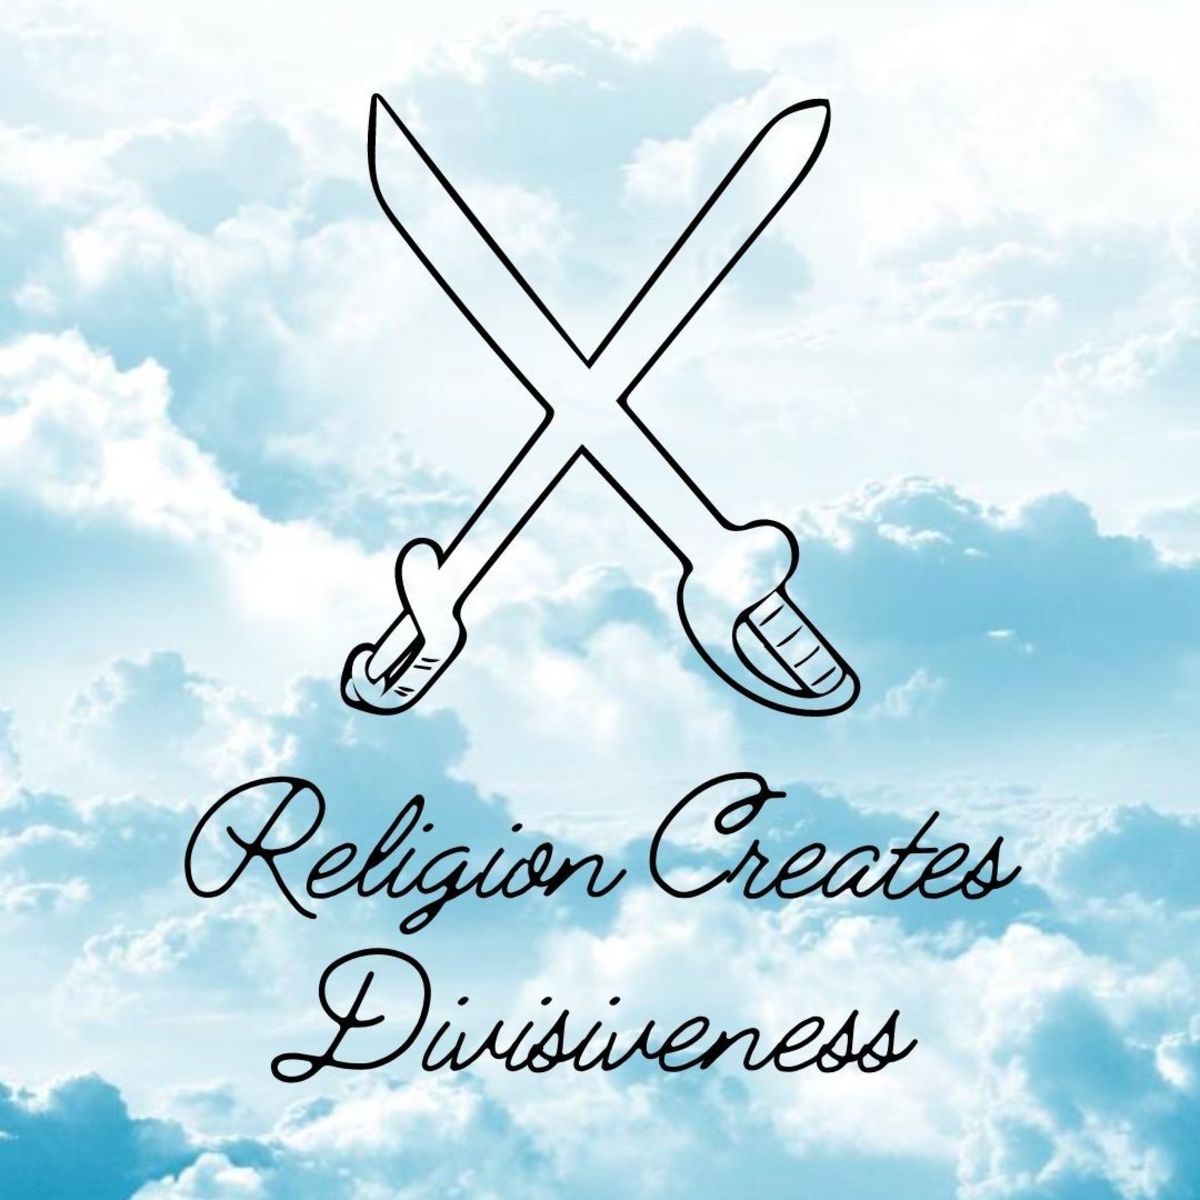 Religion creates divisiveness 